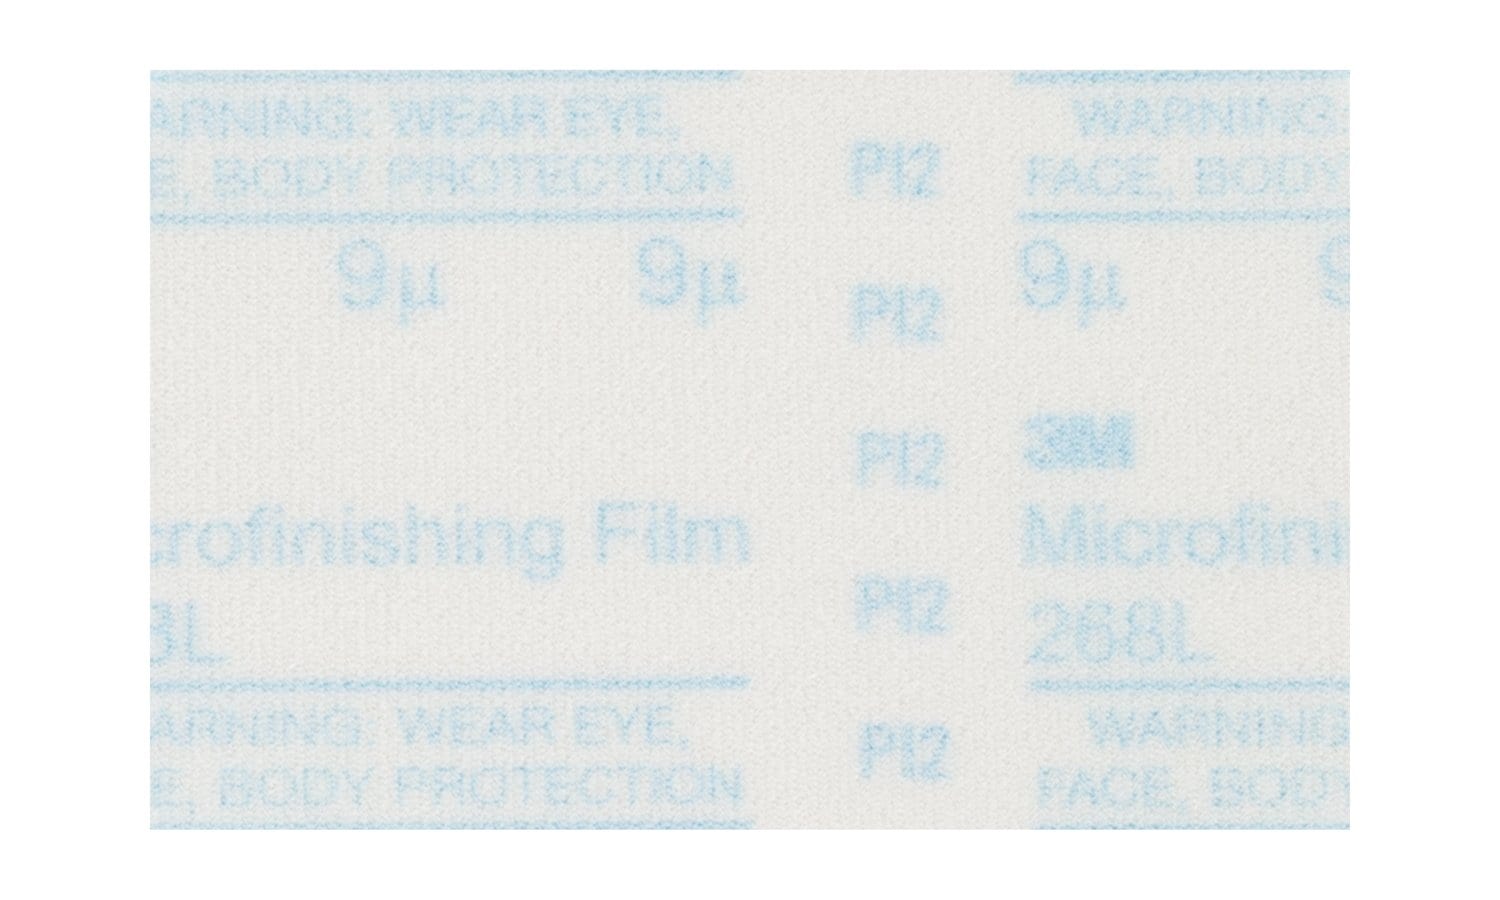 7100047229 - 3M Microfinishing Film Sheet 268L, 15 Mic, Type D, Unbacksized, Config